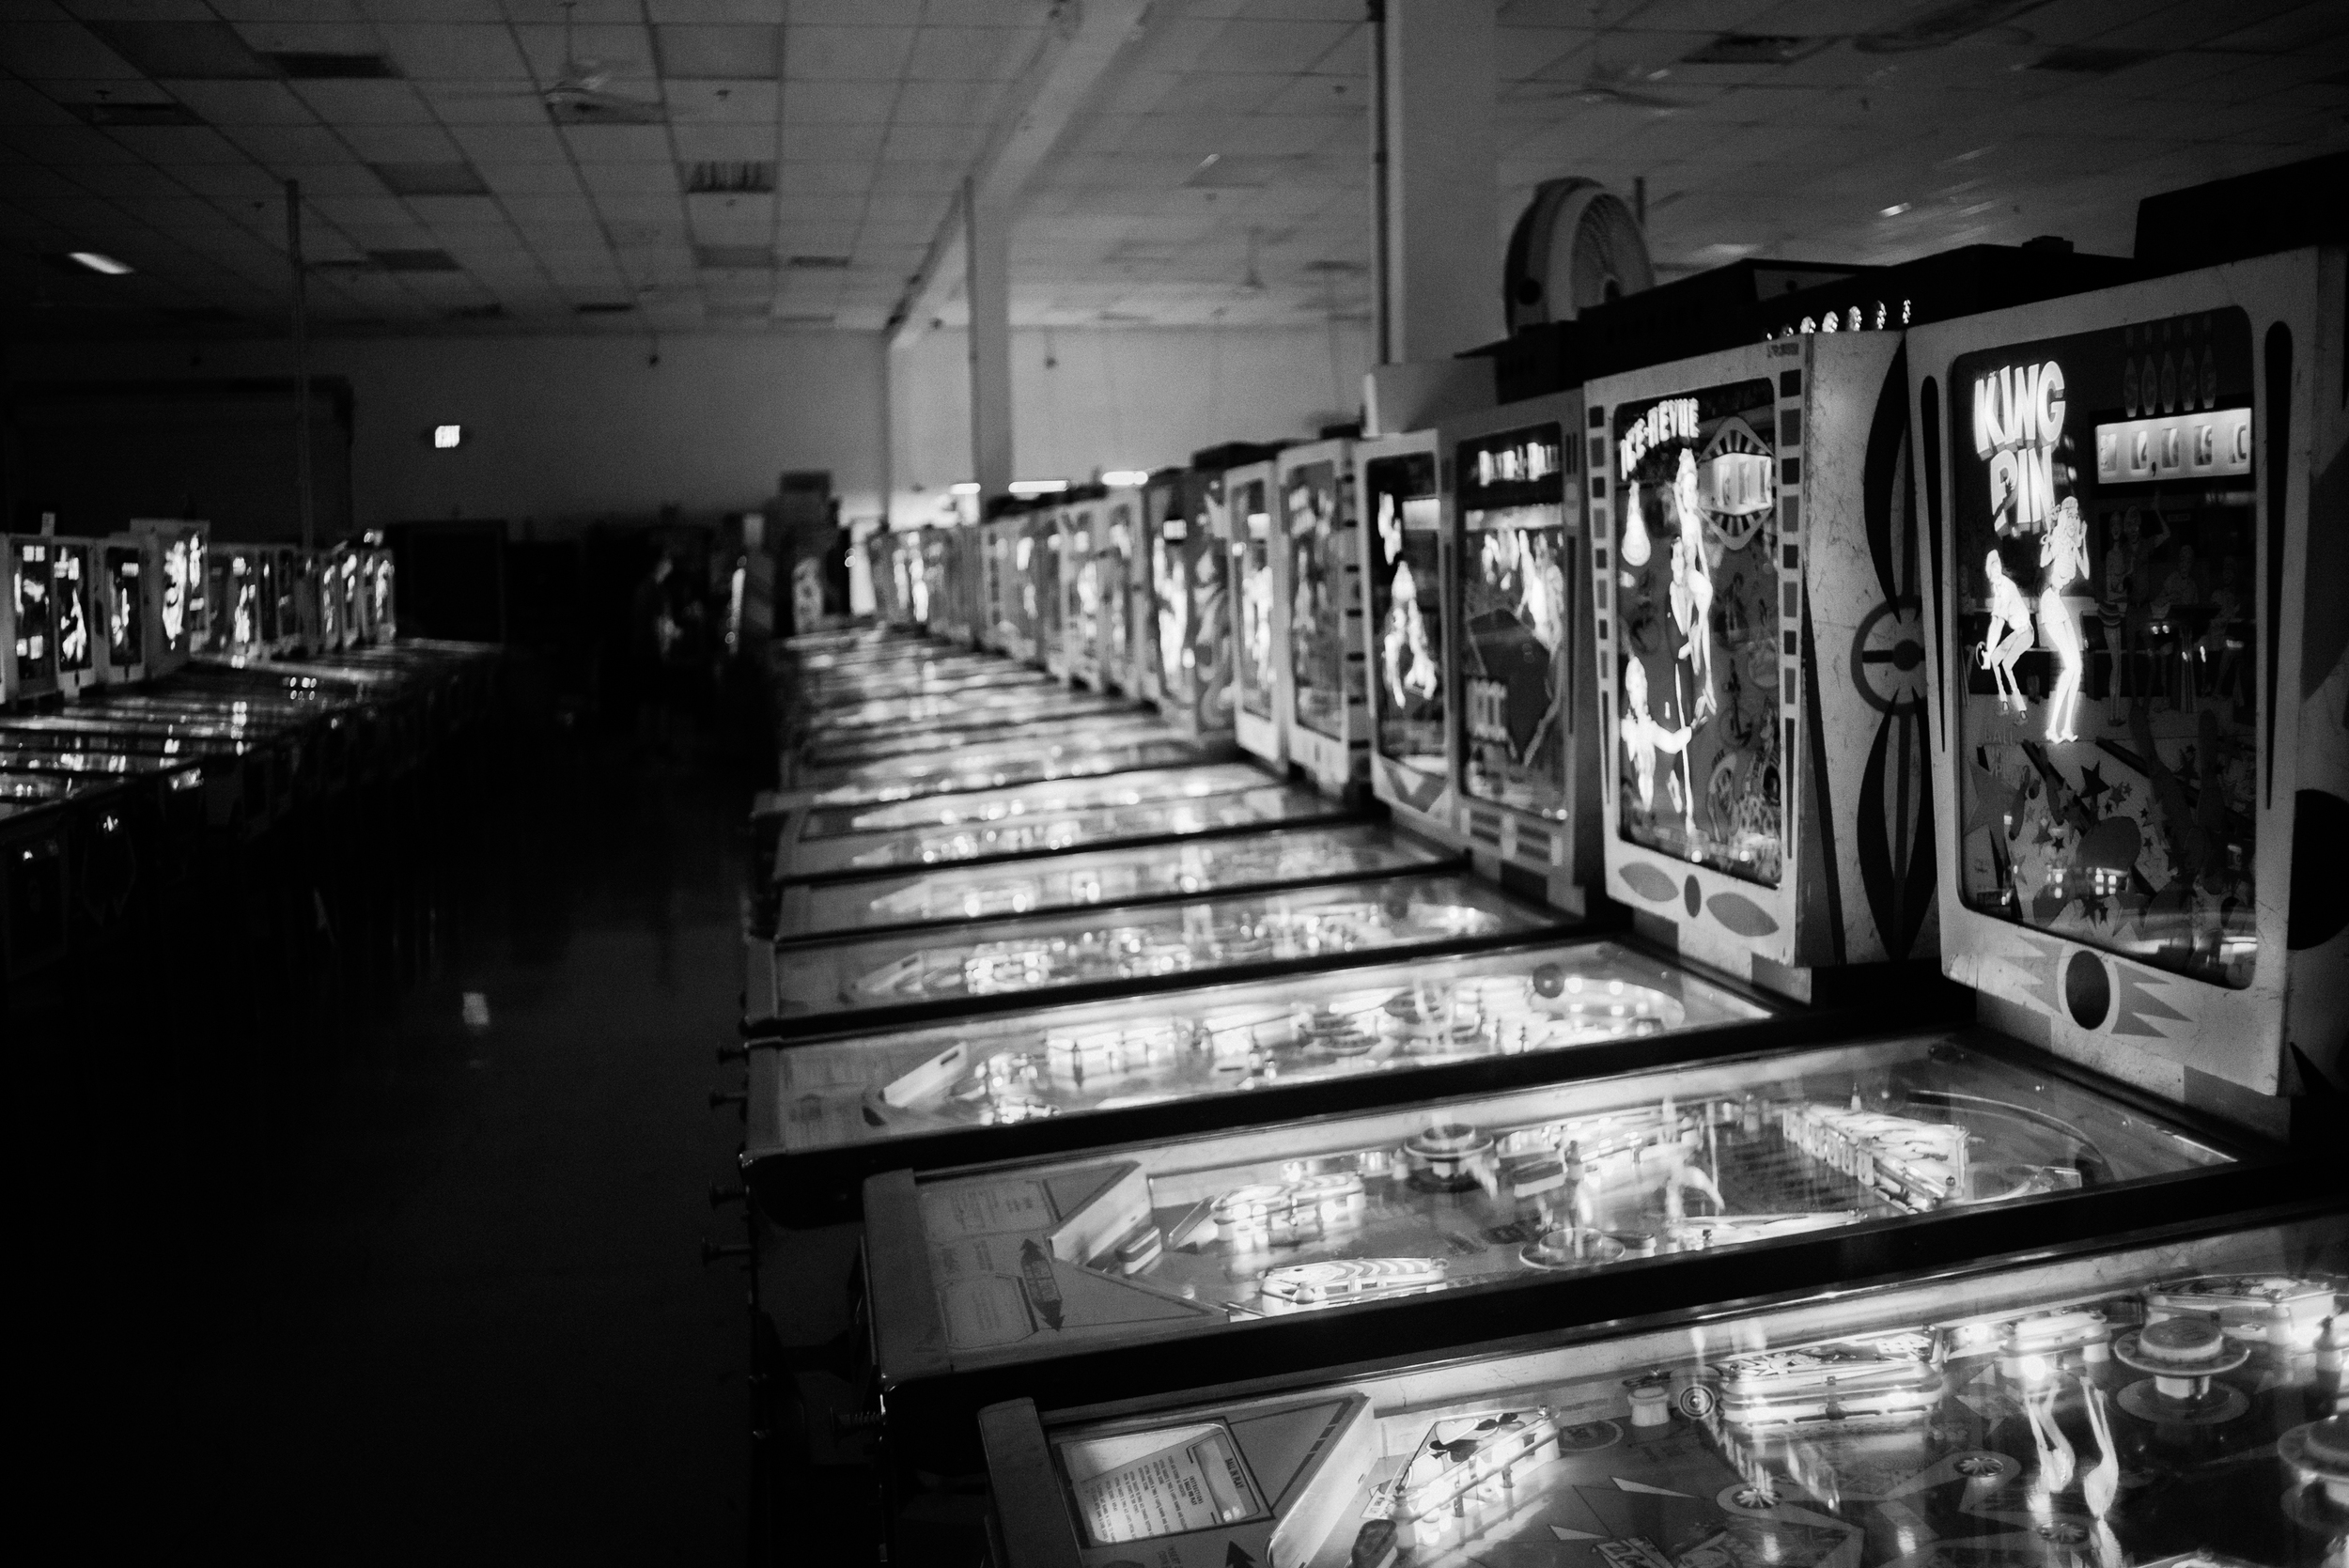 Unusual Museums: Las Vegas's Pinball Hall Of Fame